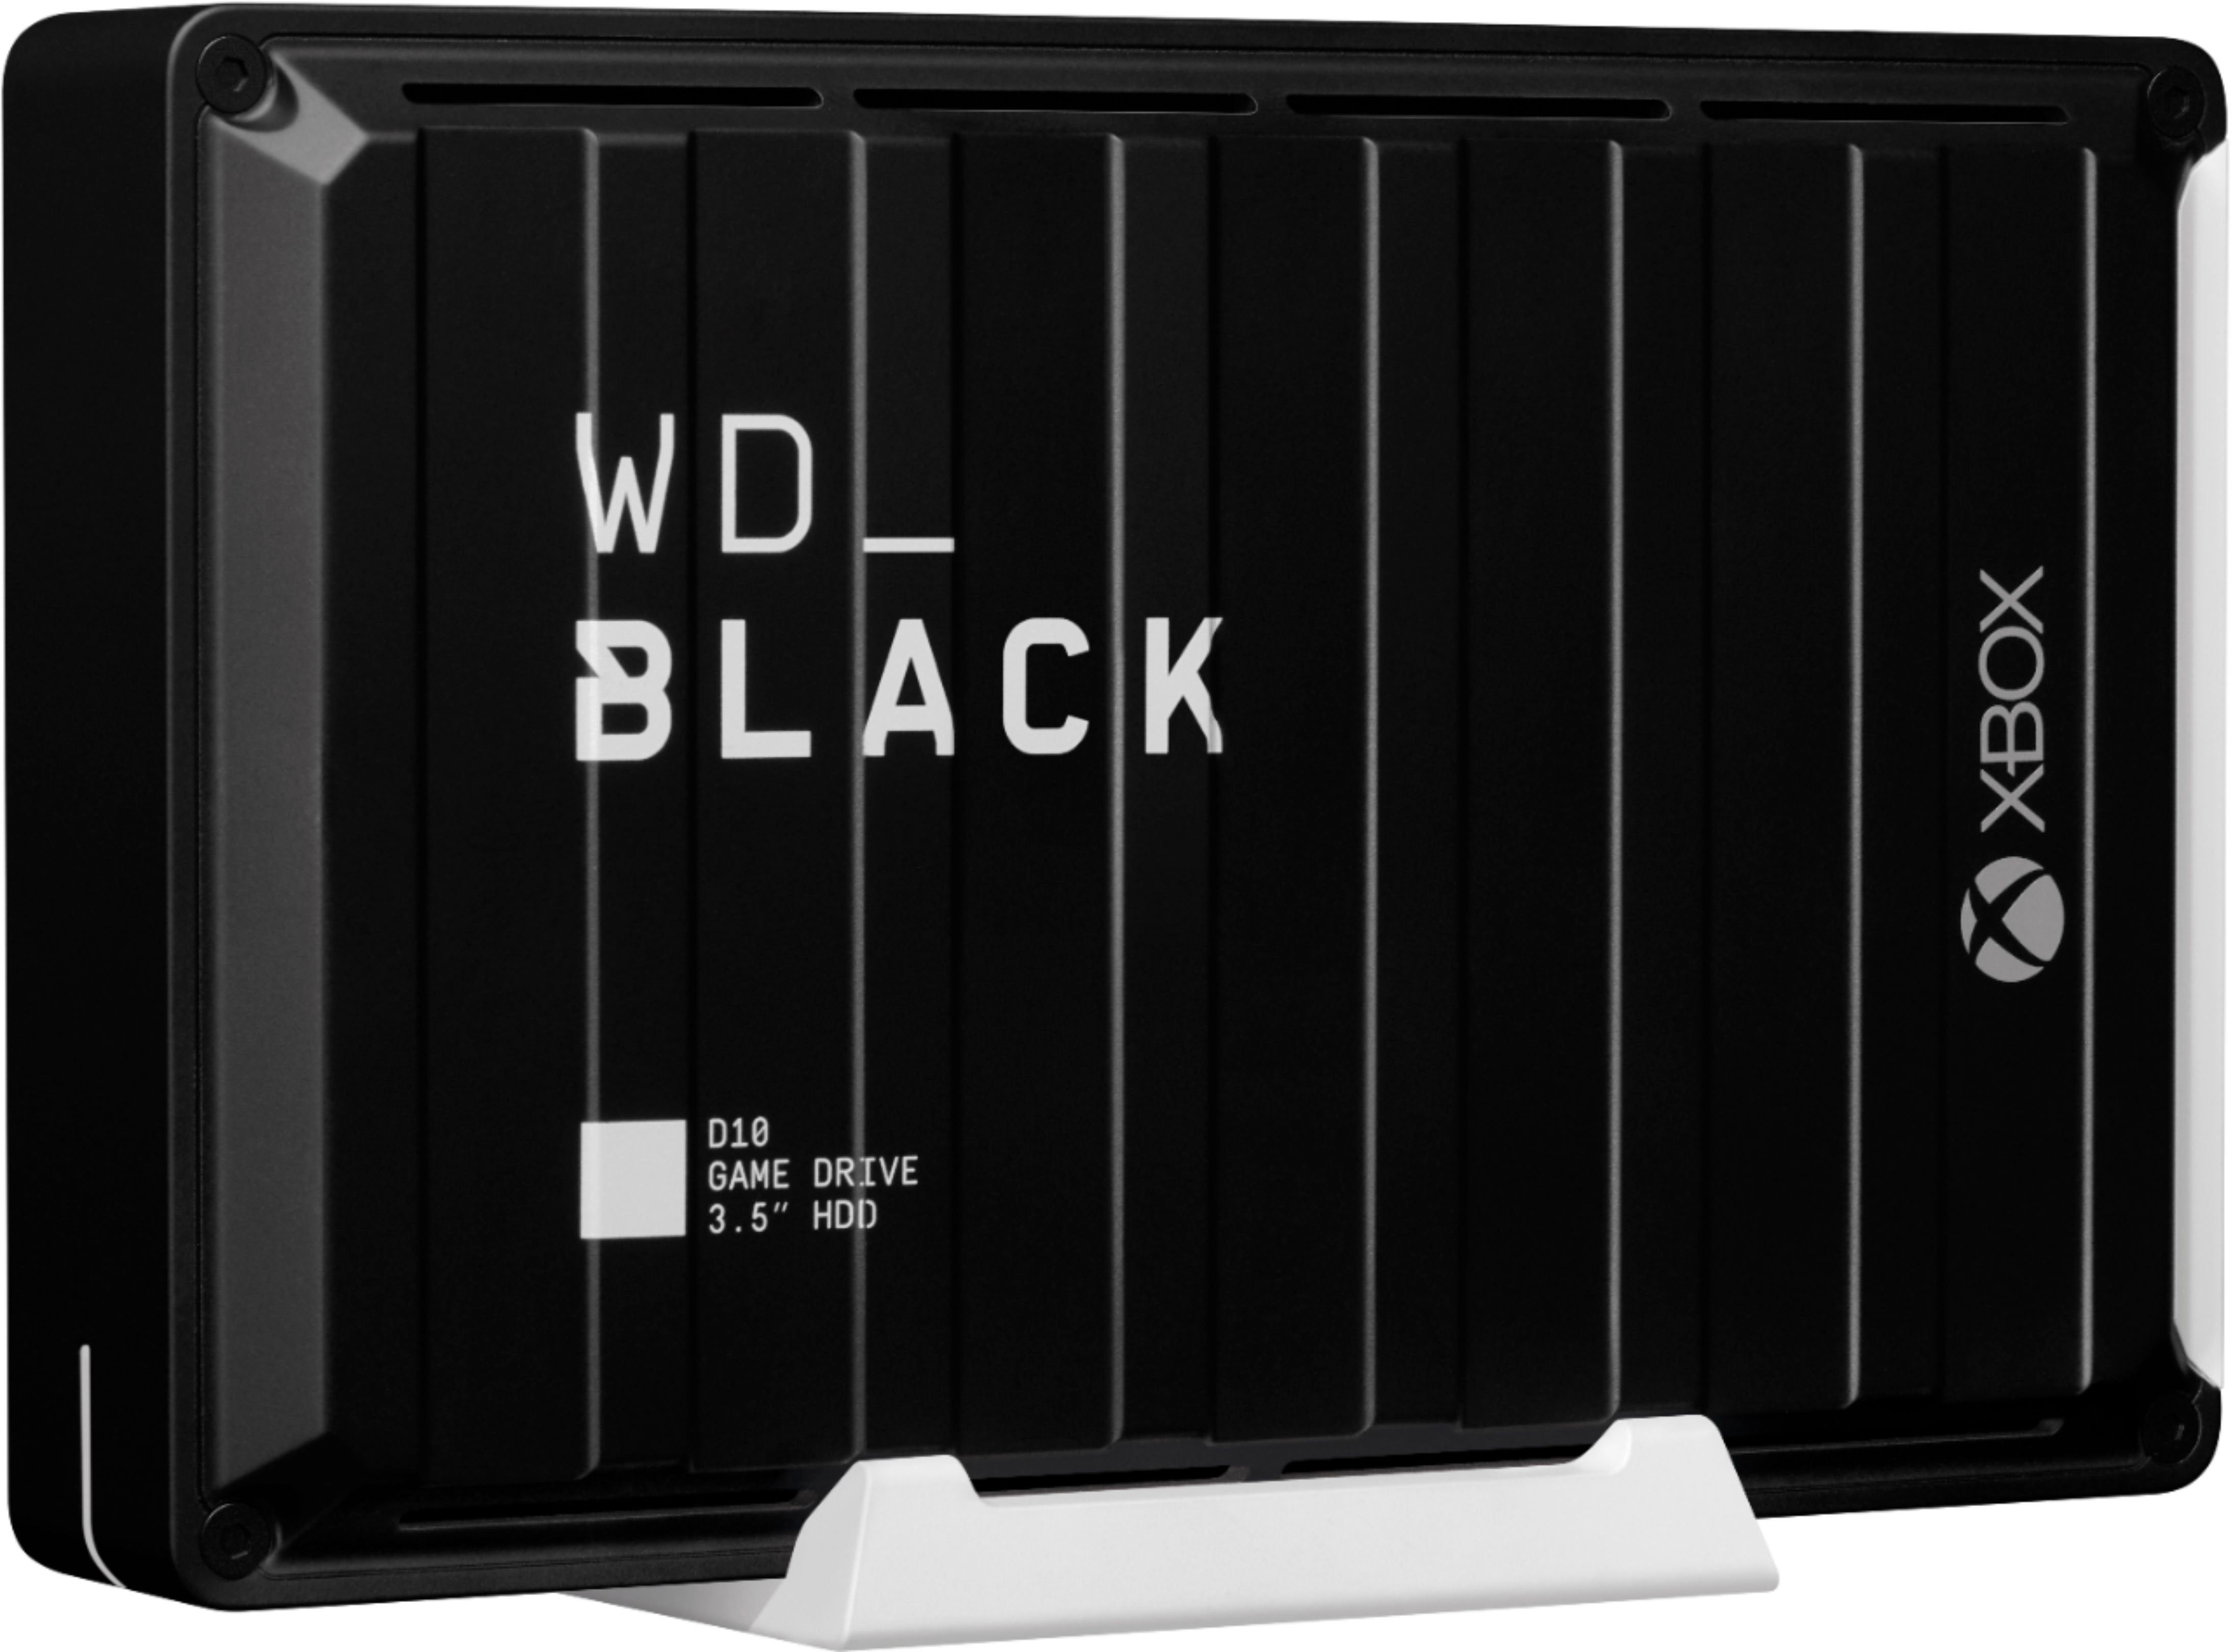 WD Black Disque dur WD Black 3.5 SATA 10 TB